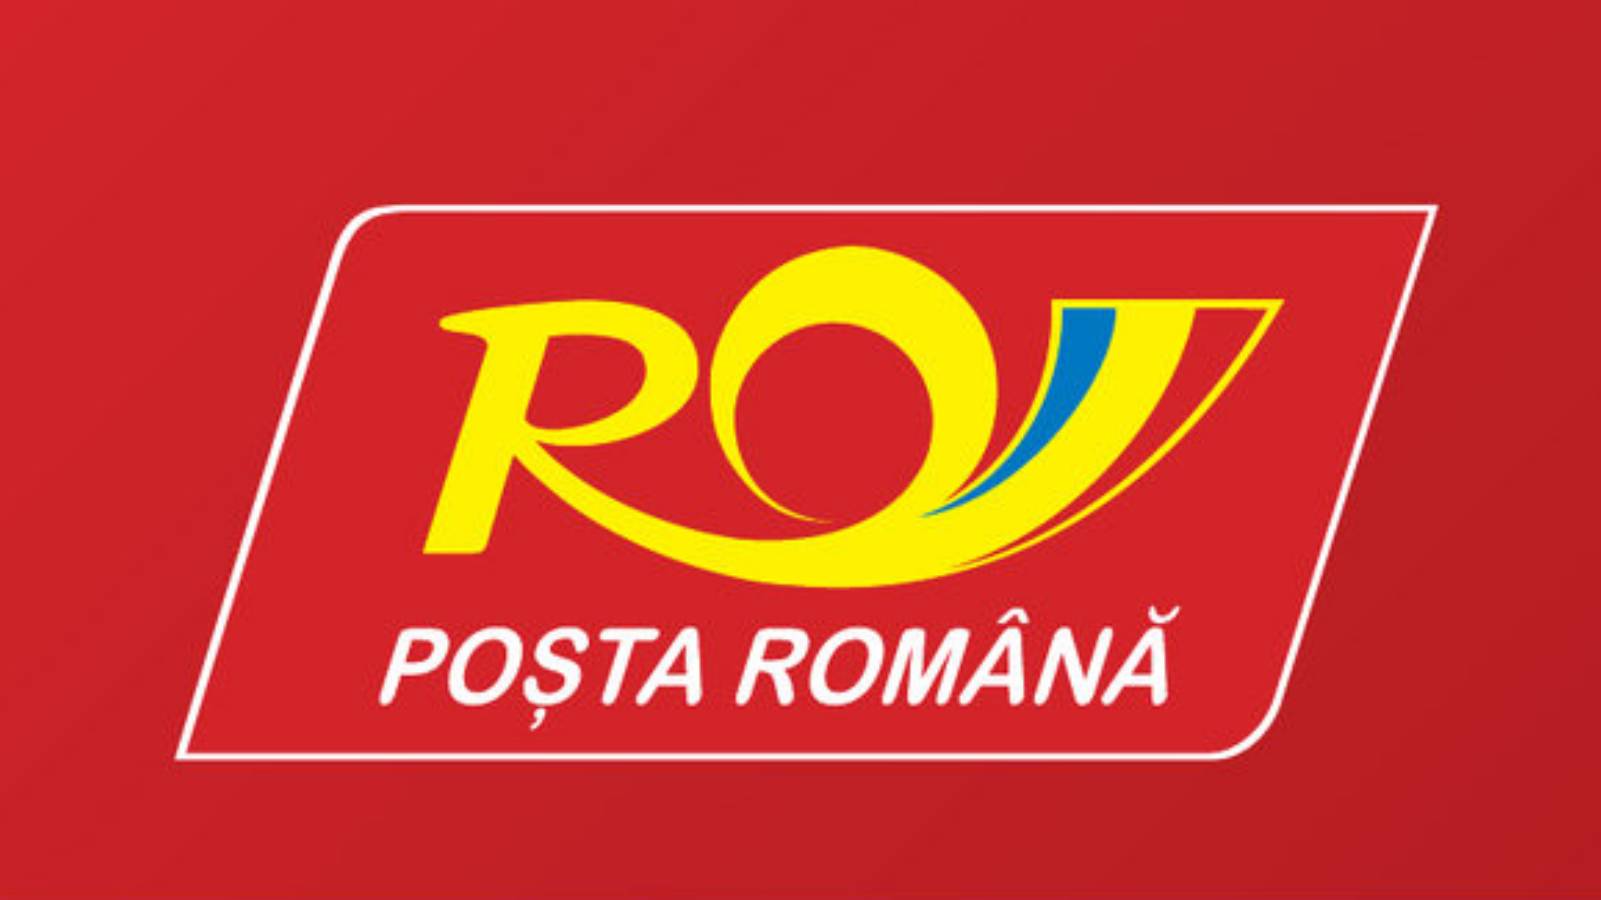 Statut de poste roumain aeo Roumanie